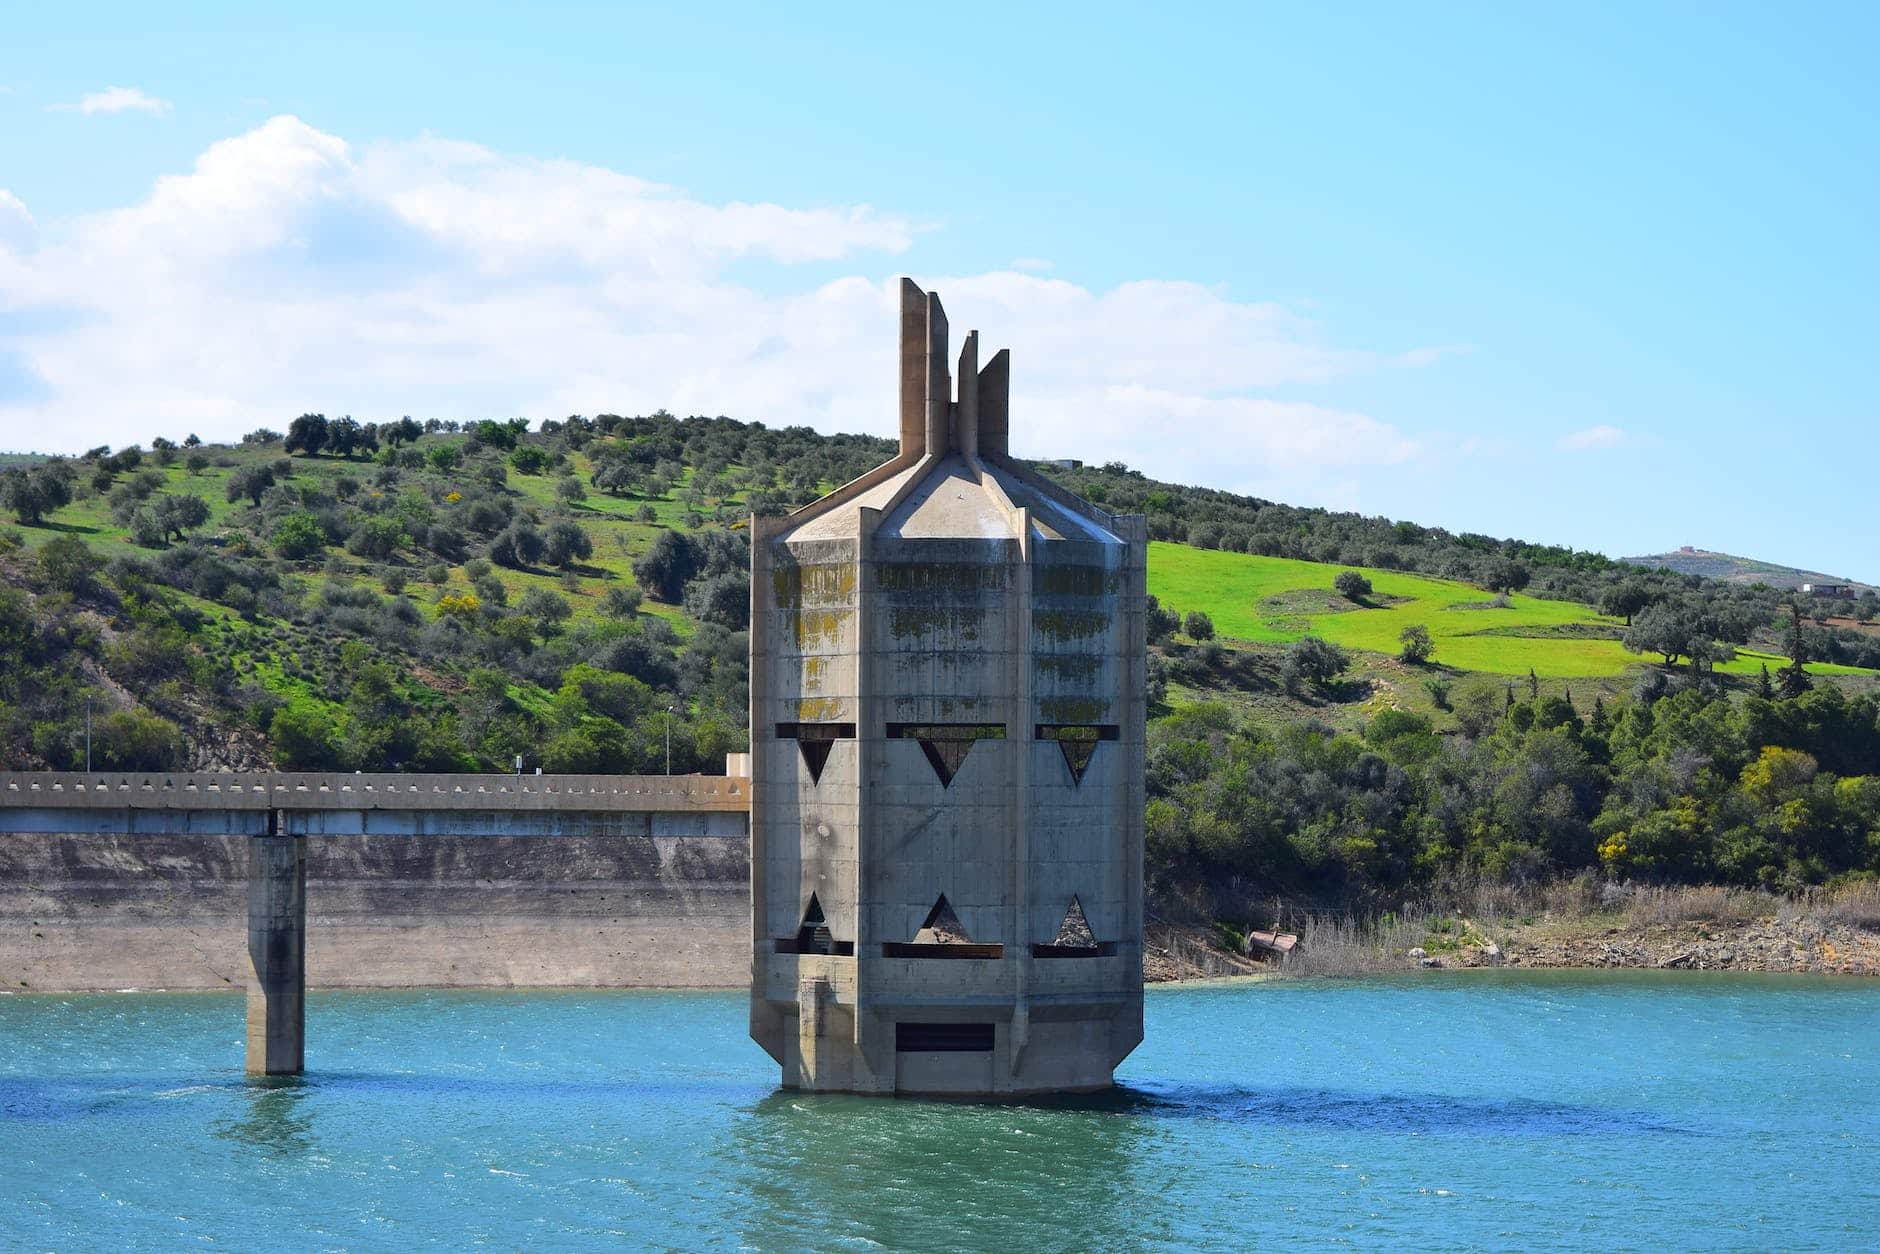 sidi salem hydroelectric dam in tunisia